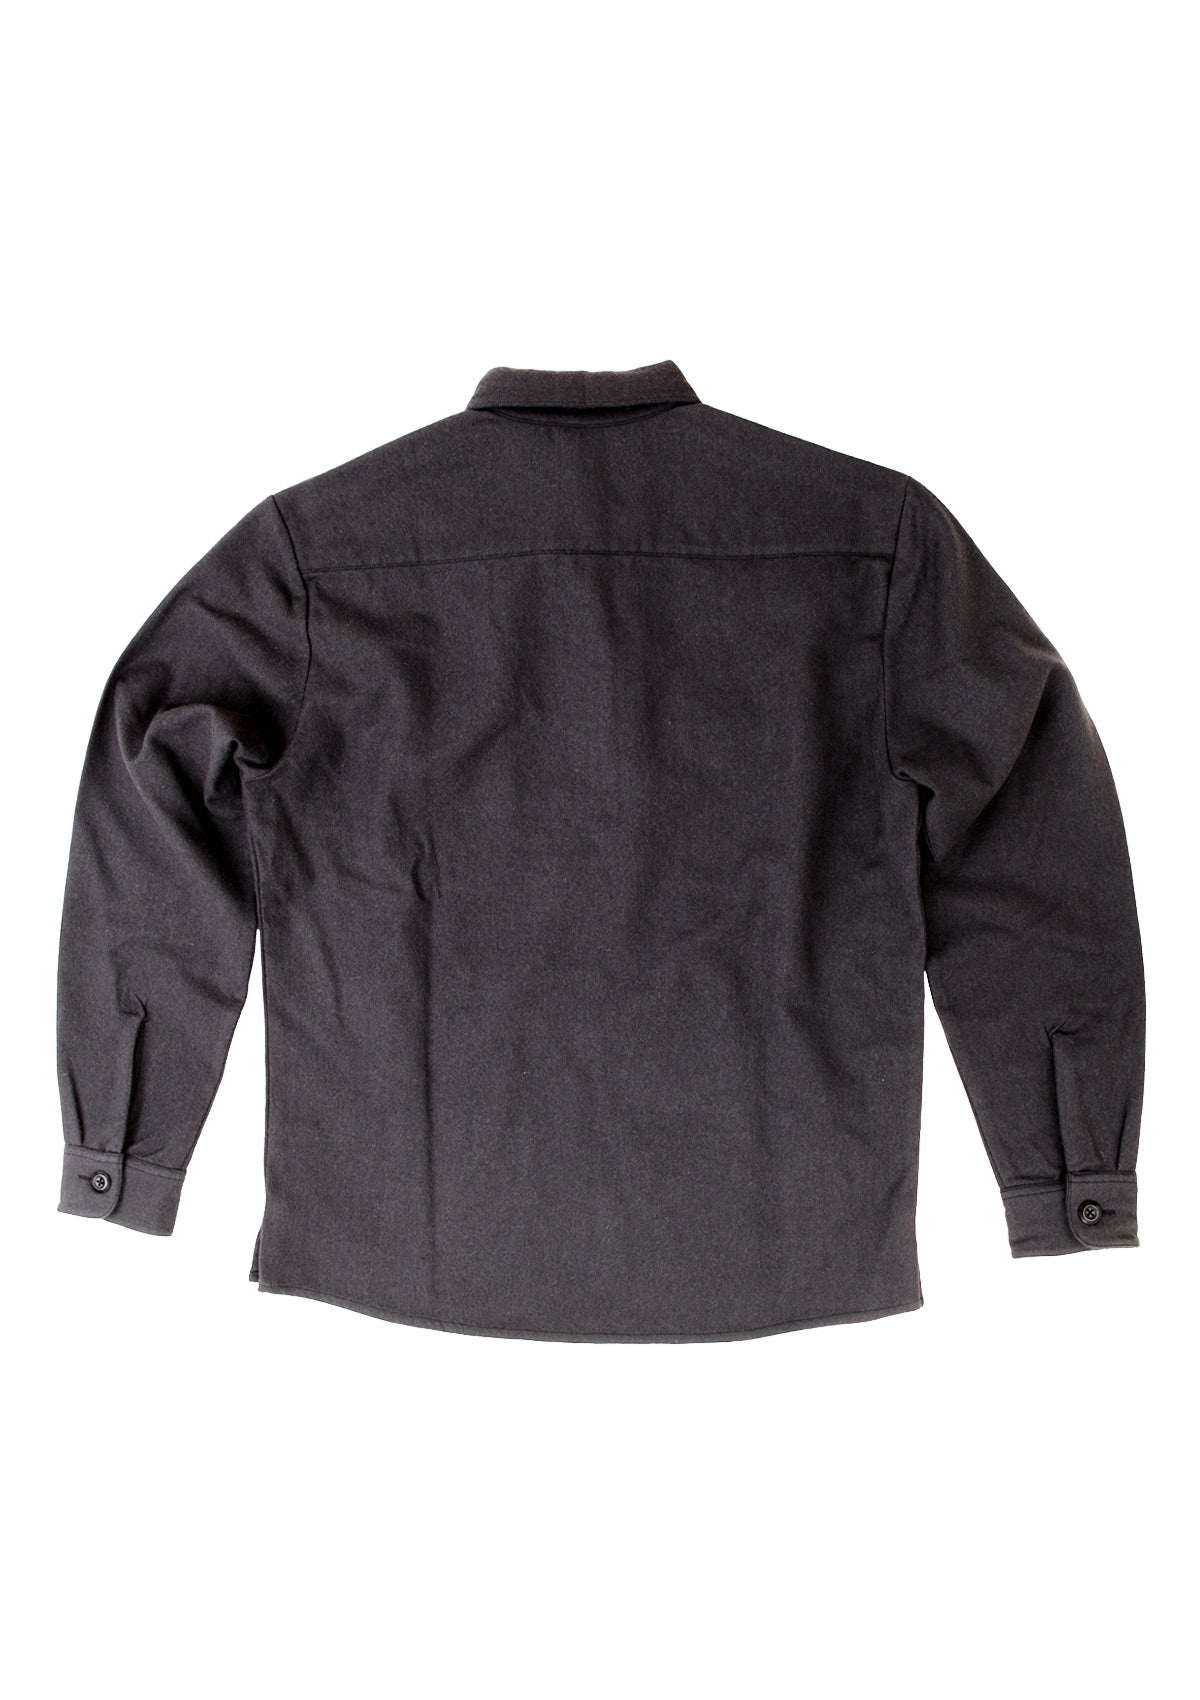 needessentials wool insulator pullover shirt black travel